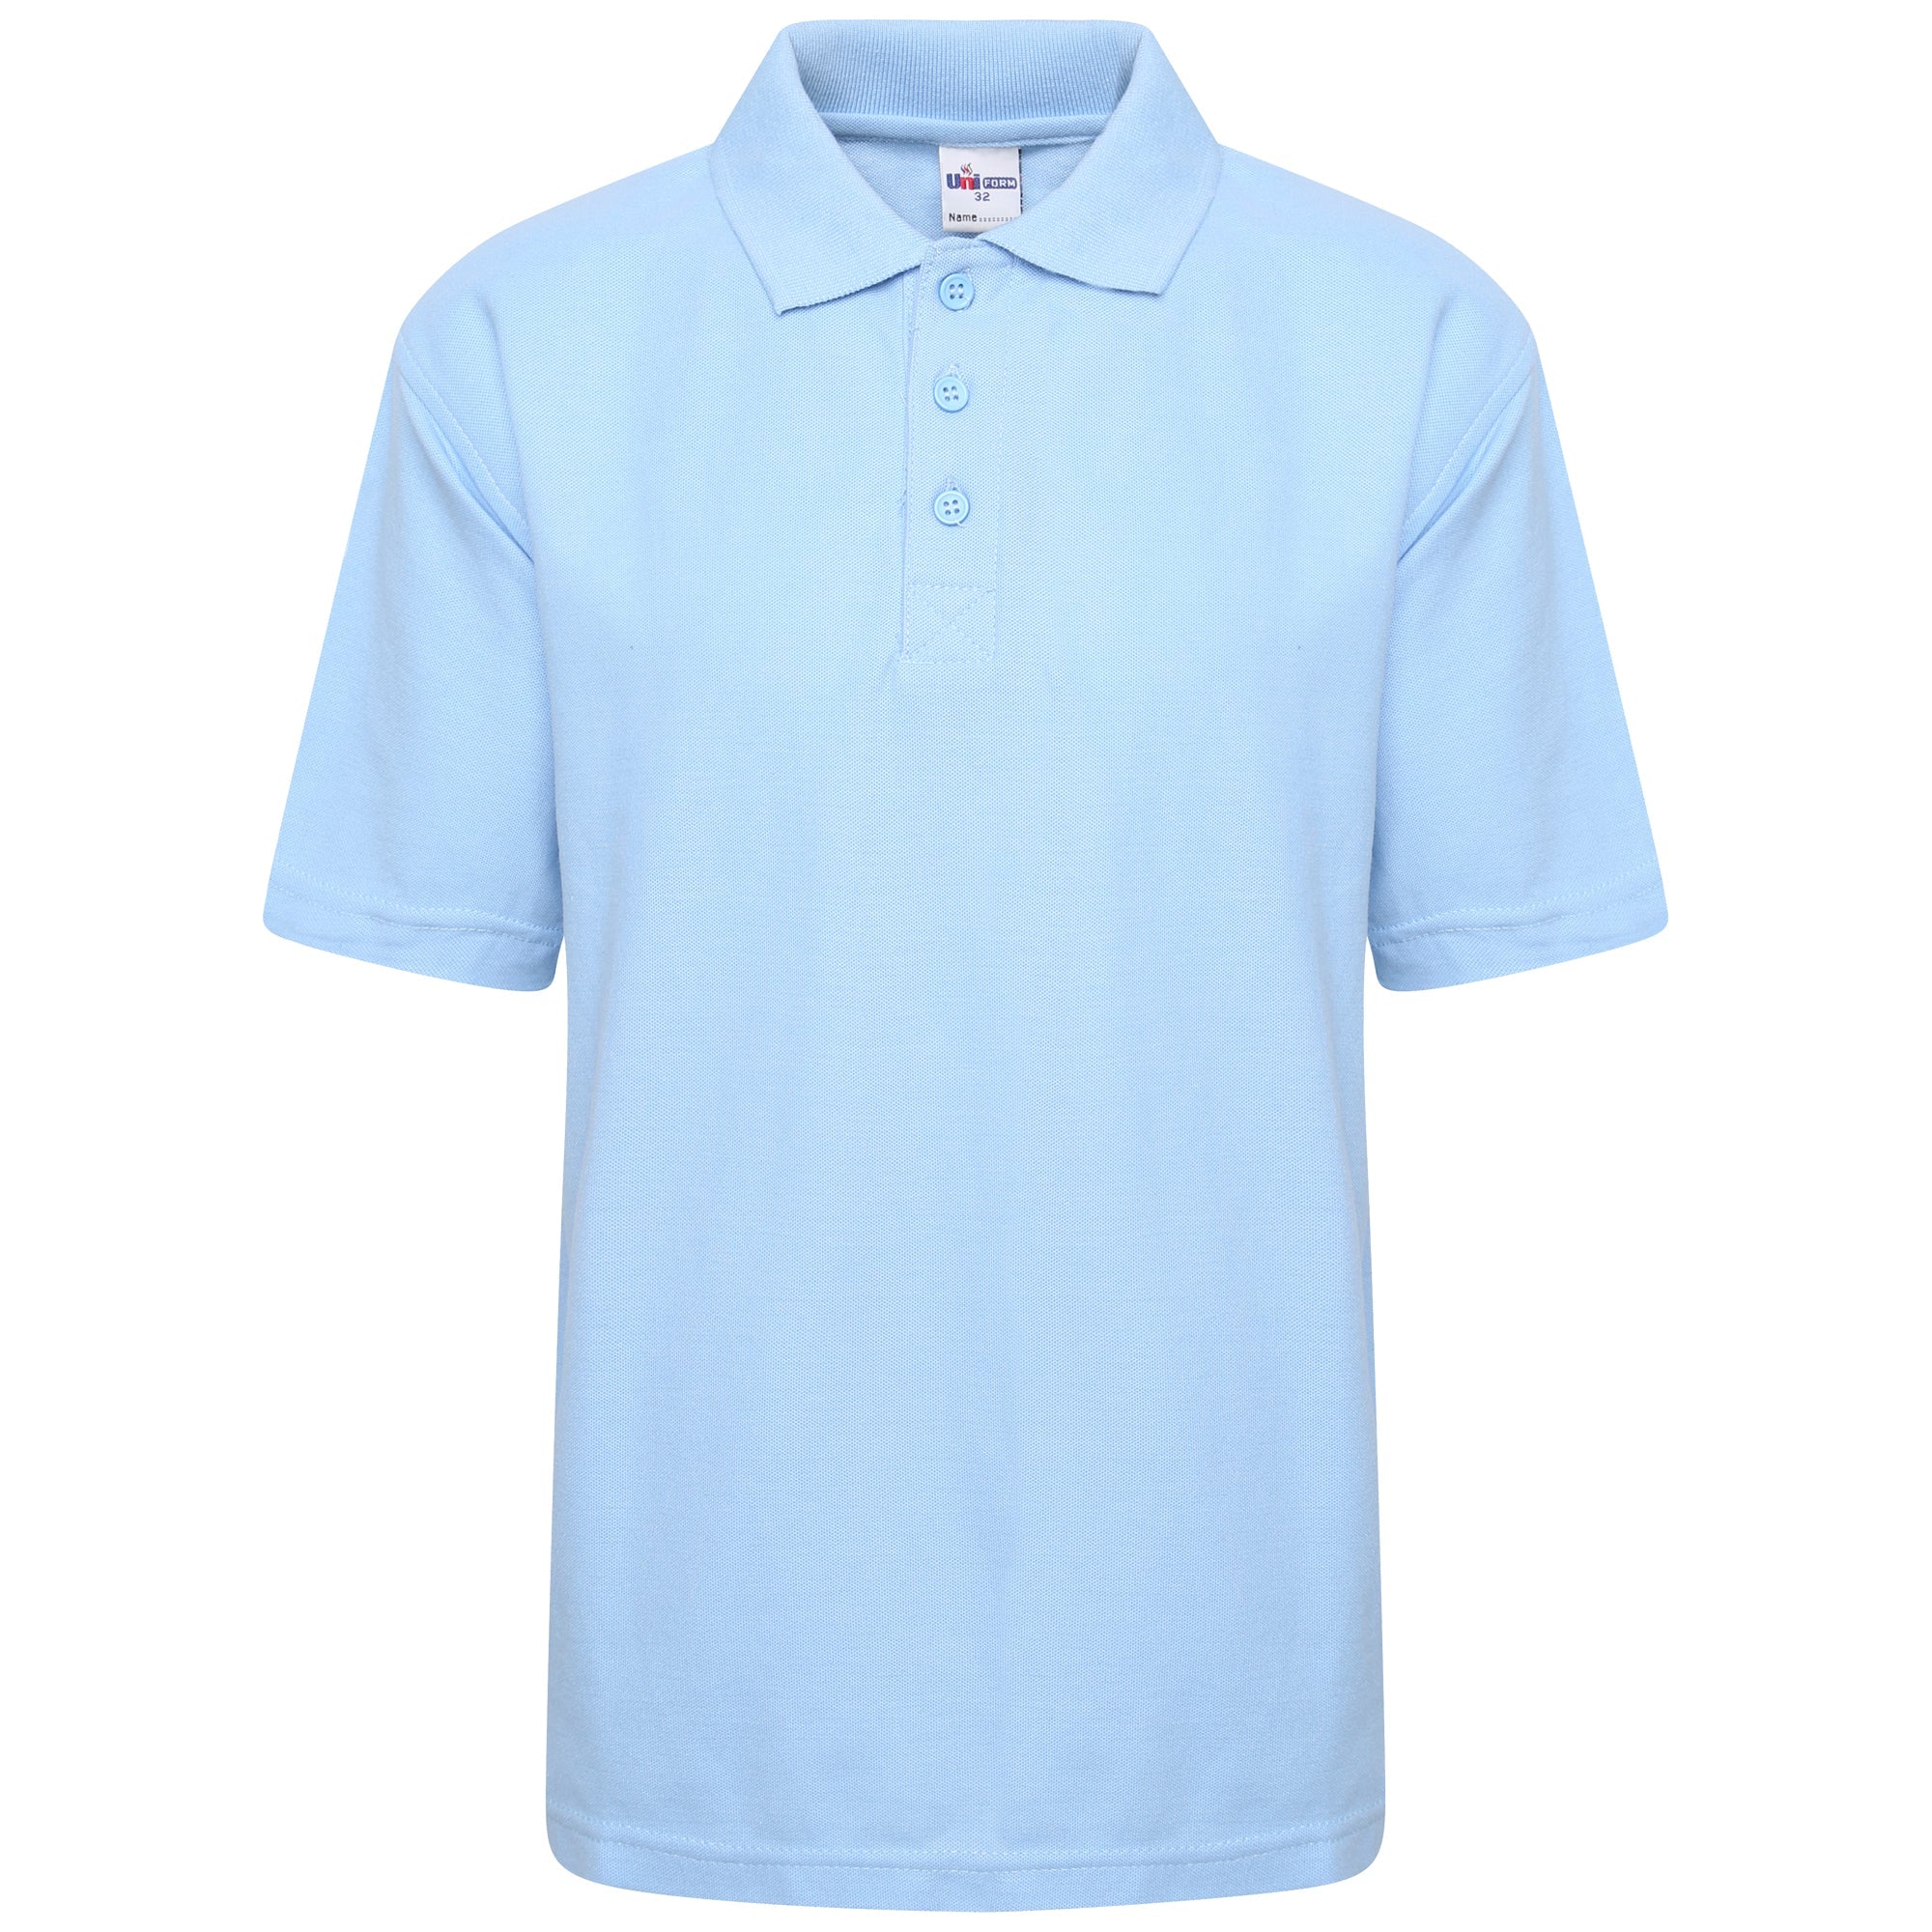 Sky Blue Polo T Shirts School Uniform  Kids T Shirt Boys Girls Tee Top Sports